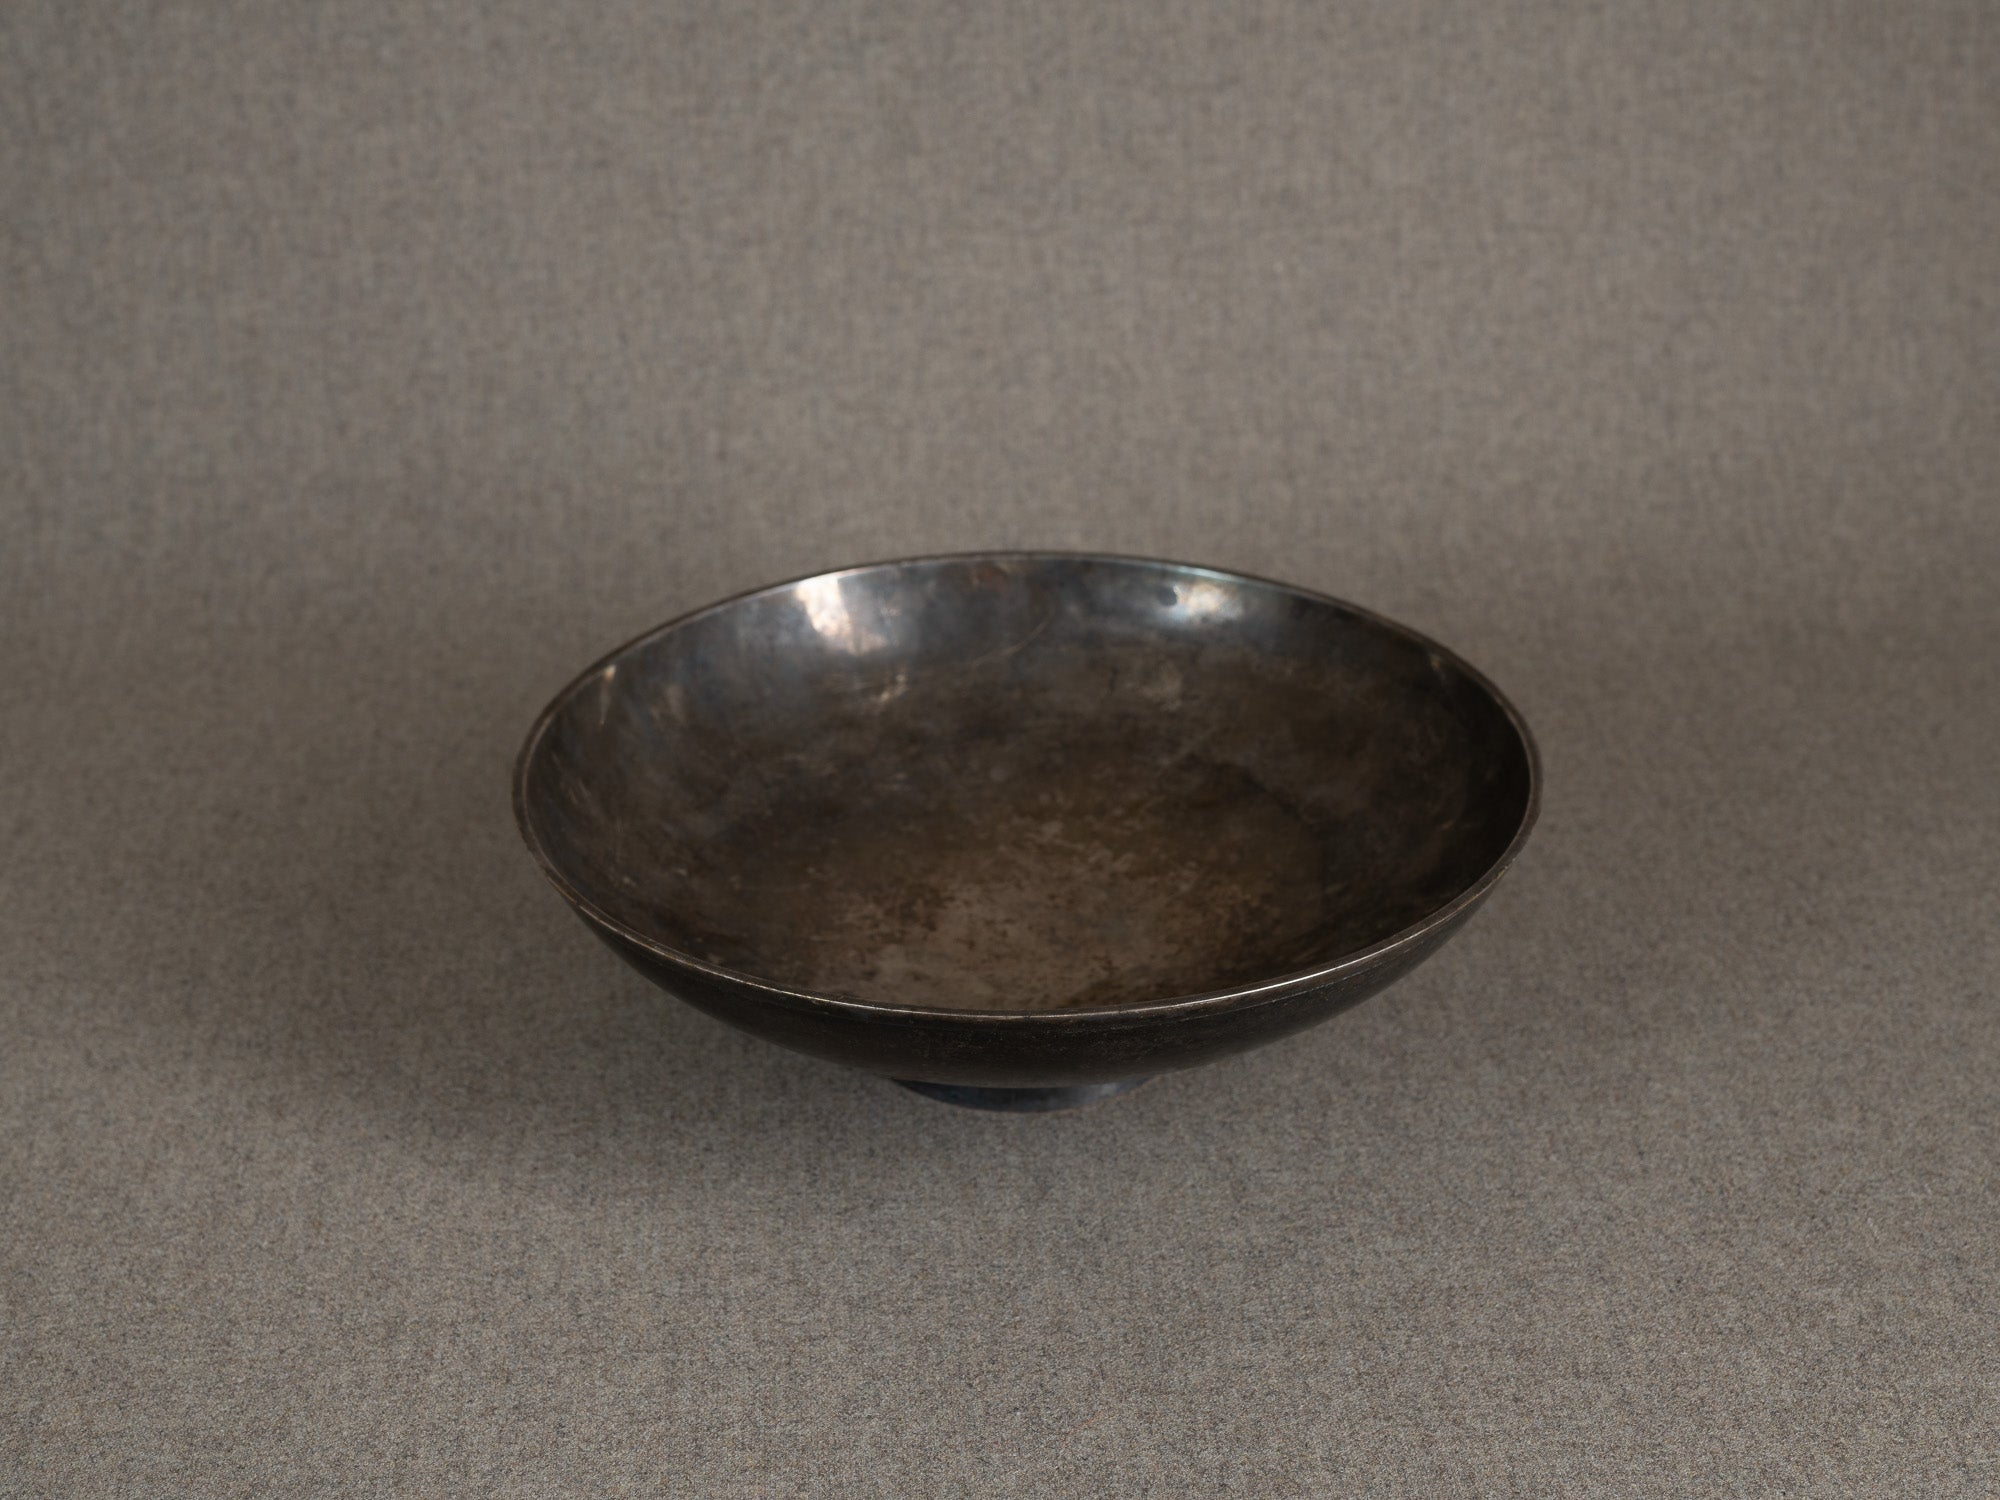 Grande coupe circulaire en métal argenté, Scandinavie (vers 1940-50)..Large neoclassical circular bowl in silverplated metal, Scandinavia (circa 1940-50)